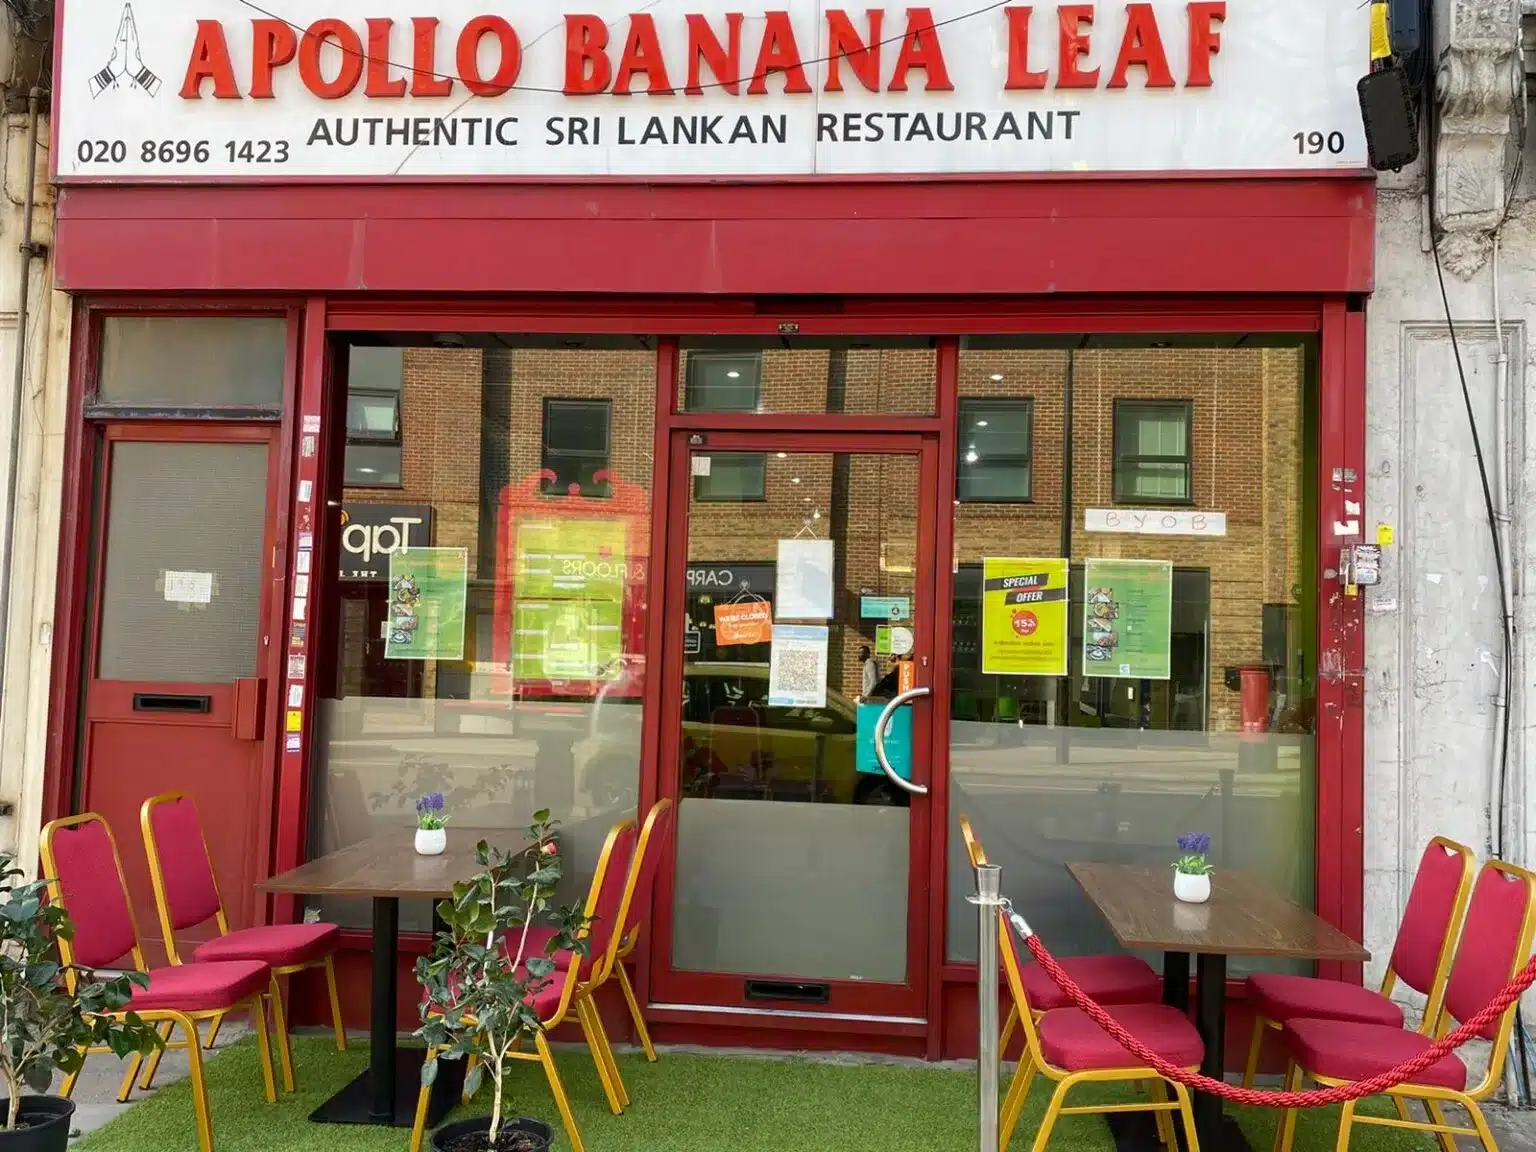 Apollo Banana Leaf in London